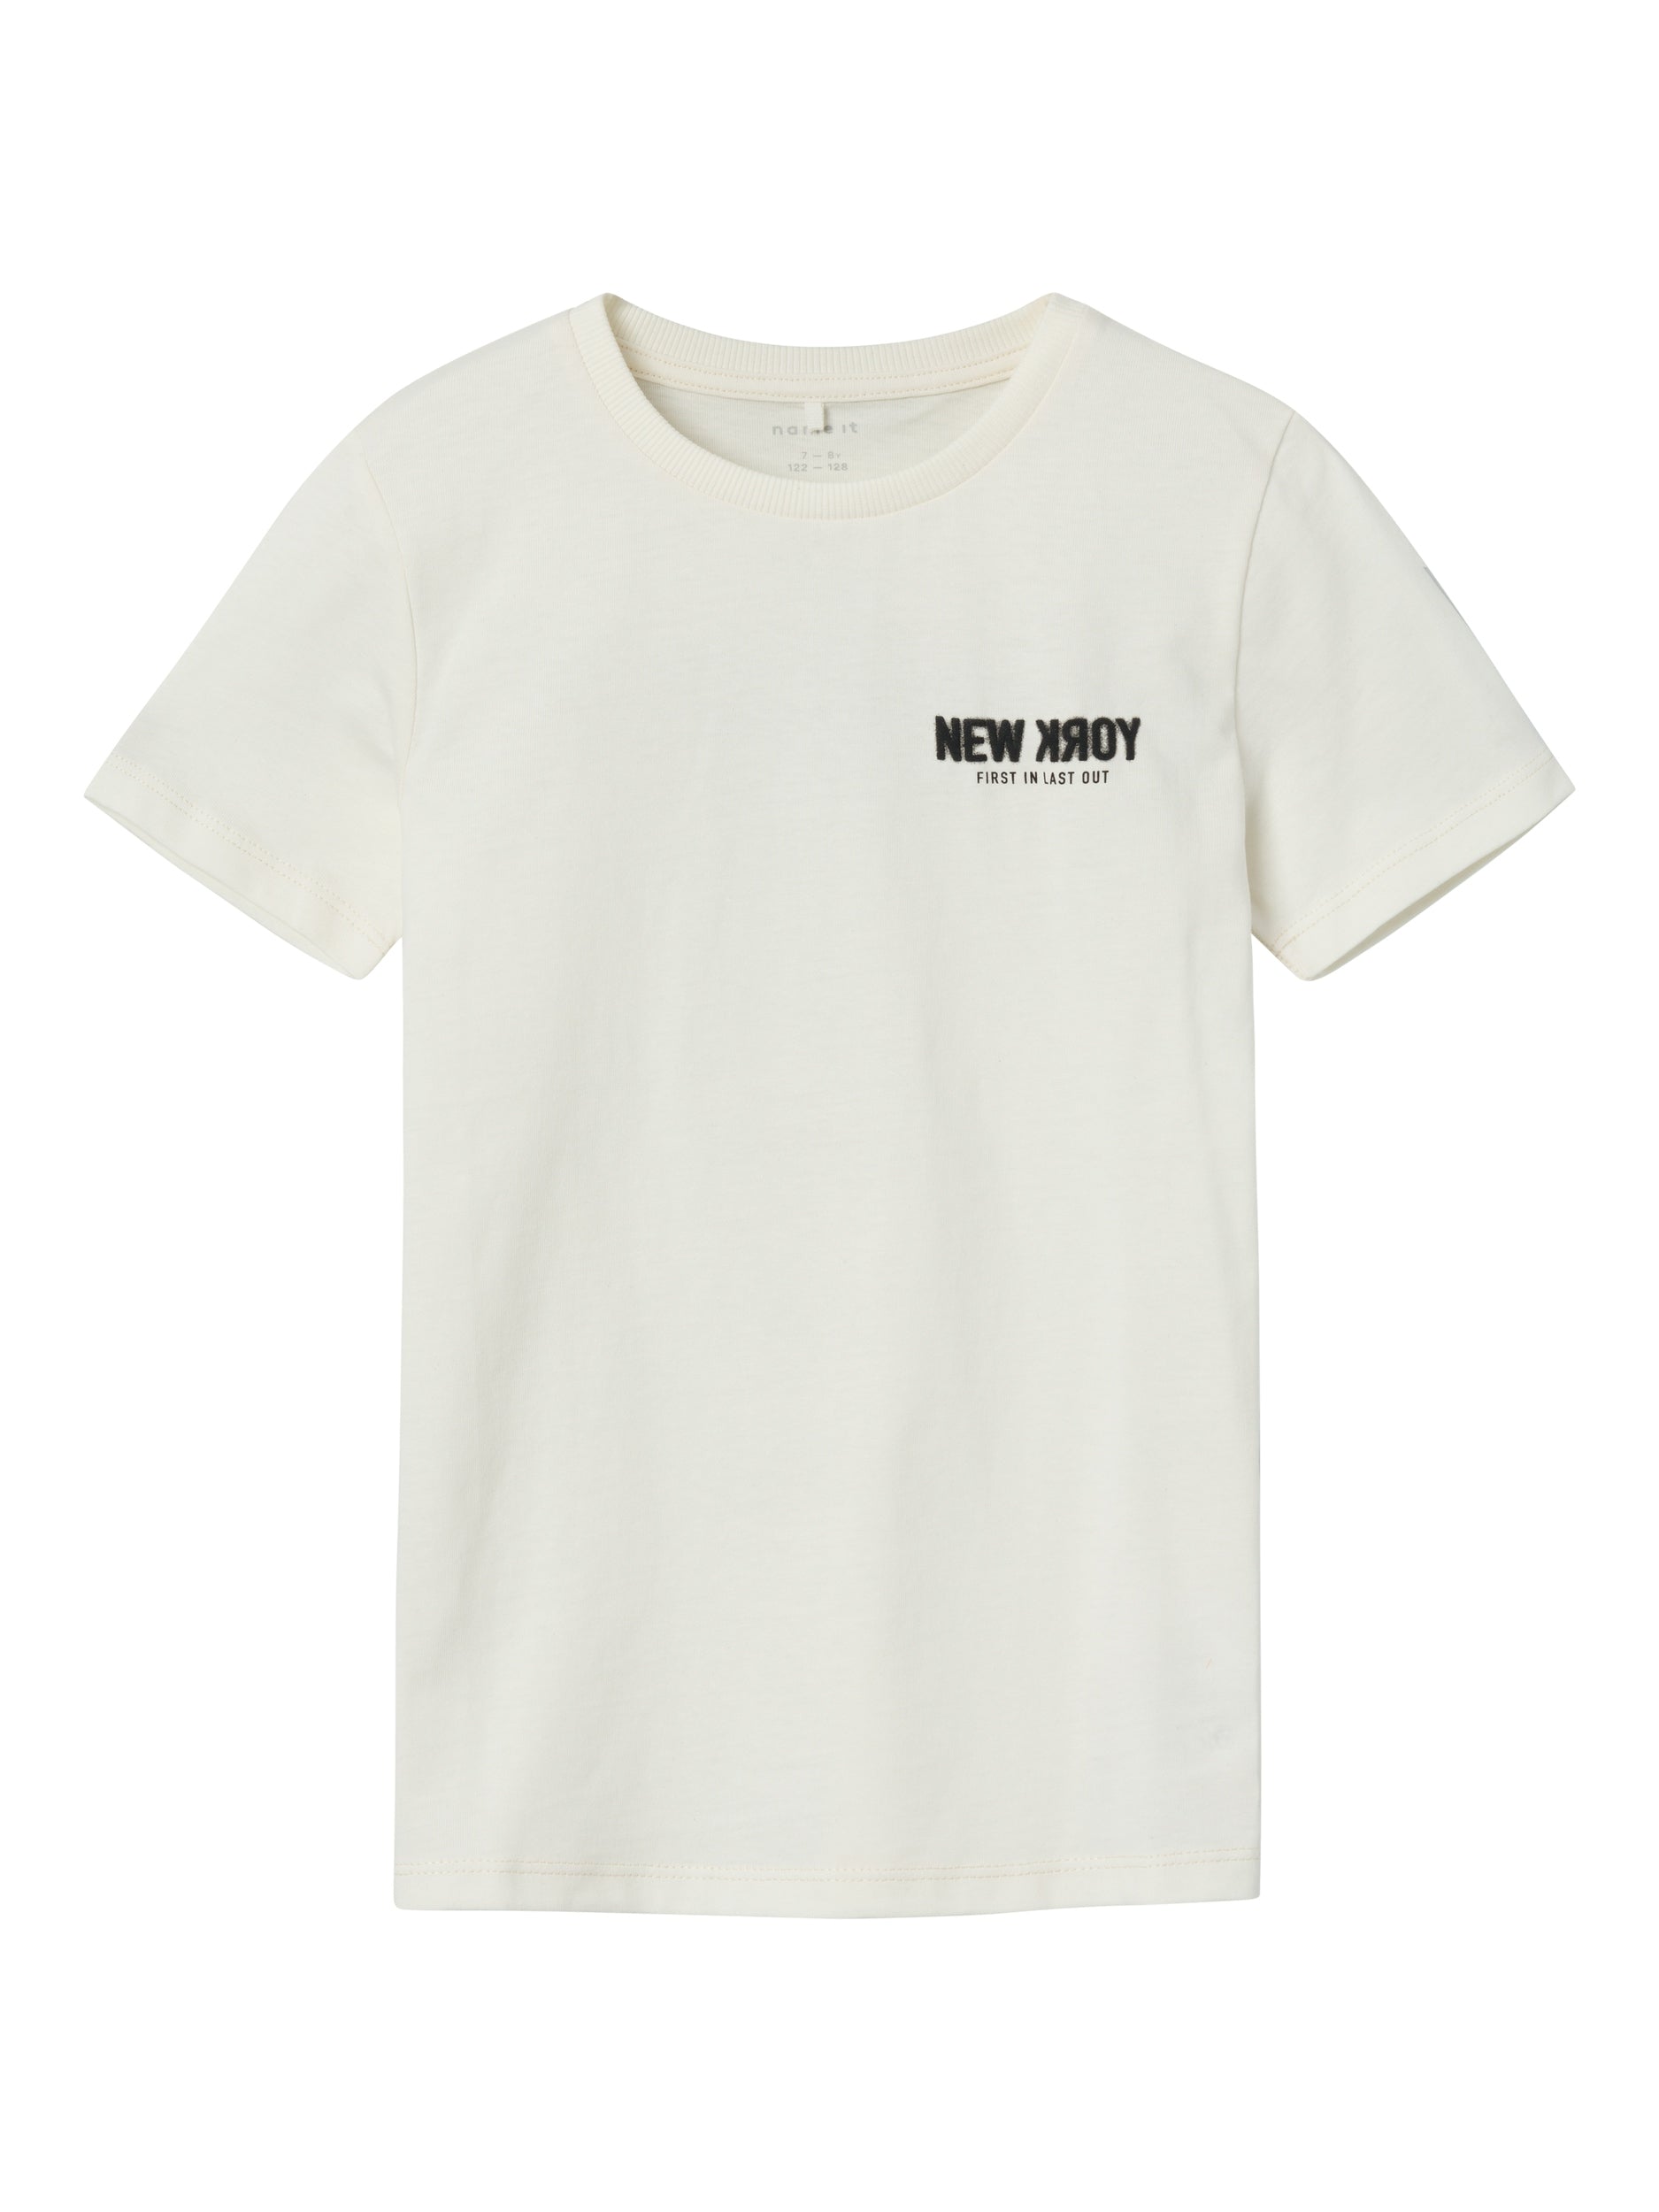 Name It t-shirt kids bianco con stampa New York